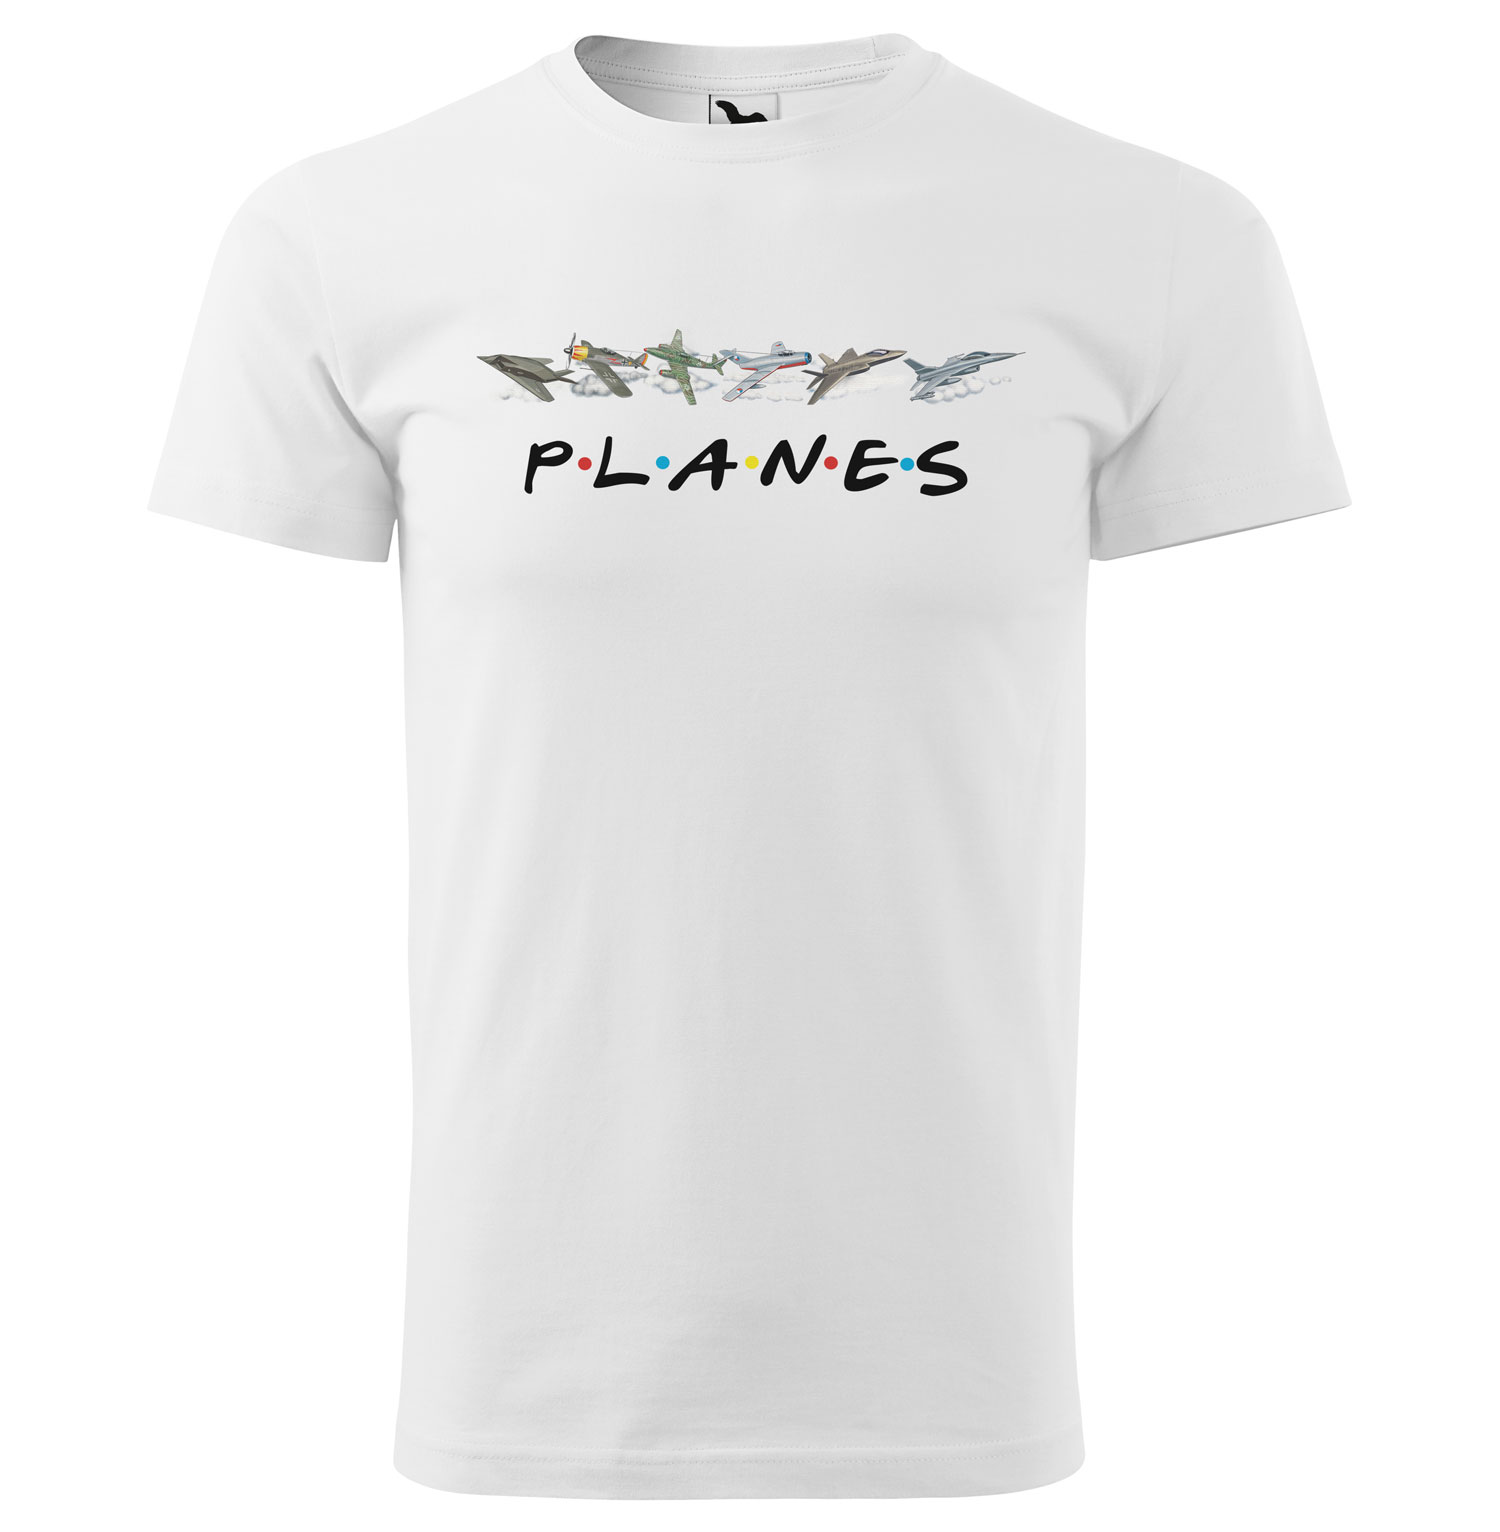 Tričko Planes (Velikost: XL, Typ: pro muže, Barva trička: Bílá)